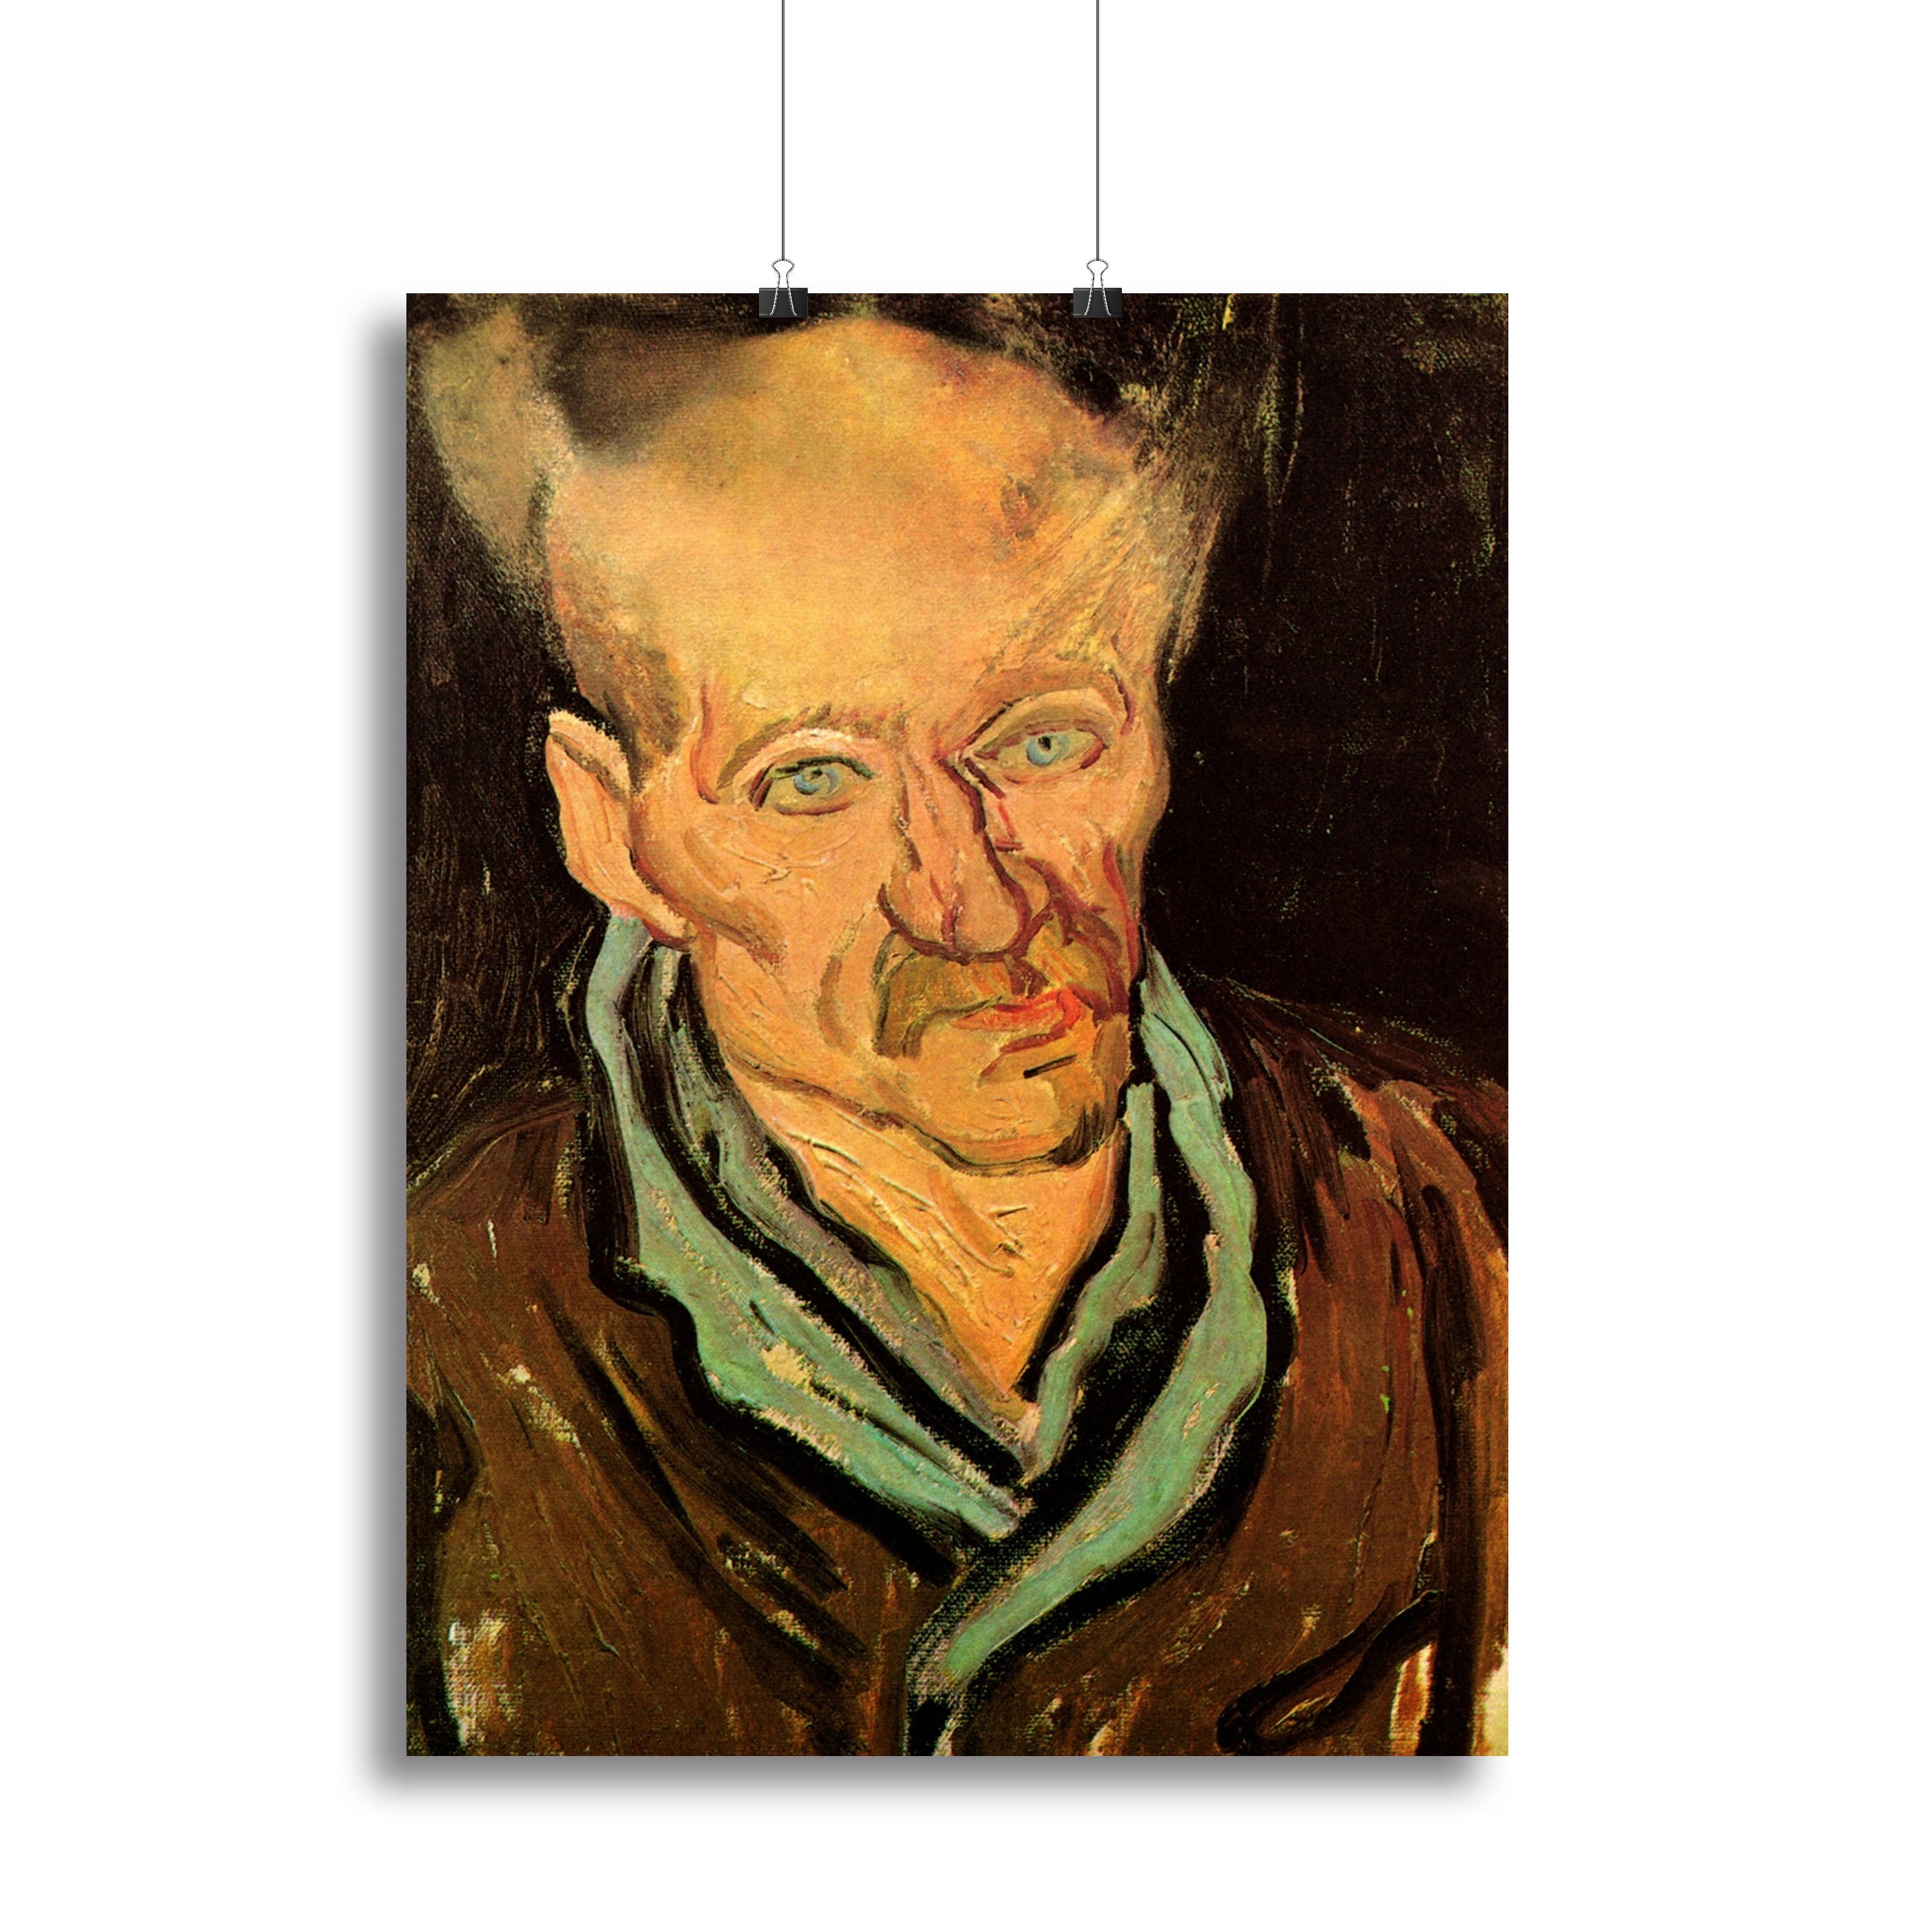 Portrait of a Patient in Saint-Paul Hospital by Van Gogh Canvas Print or Poster - Canvas Art Rocks - 2